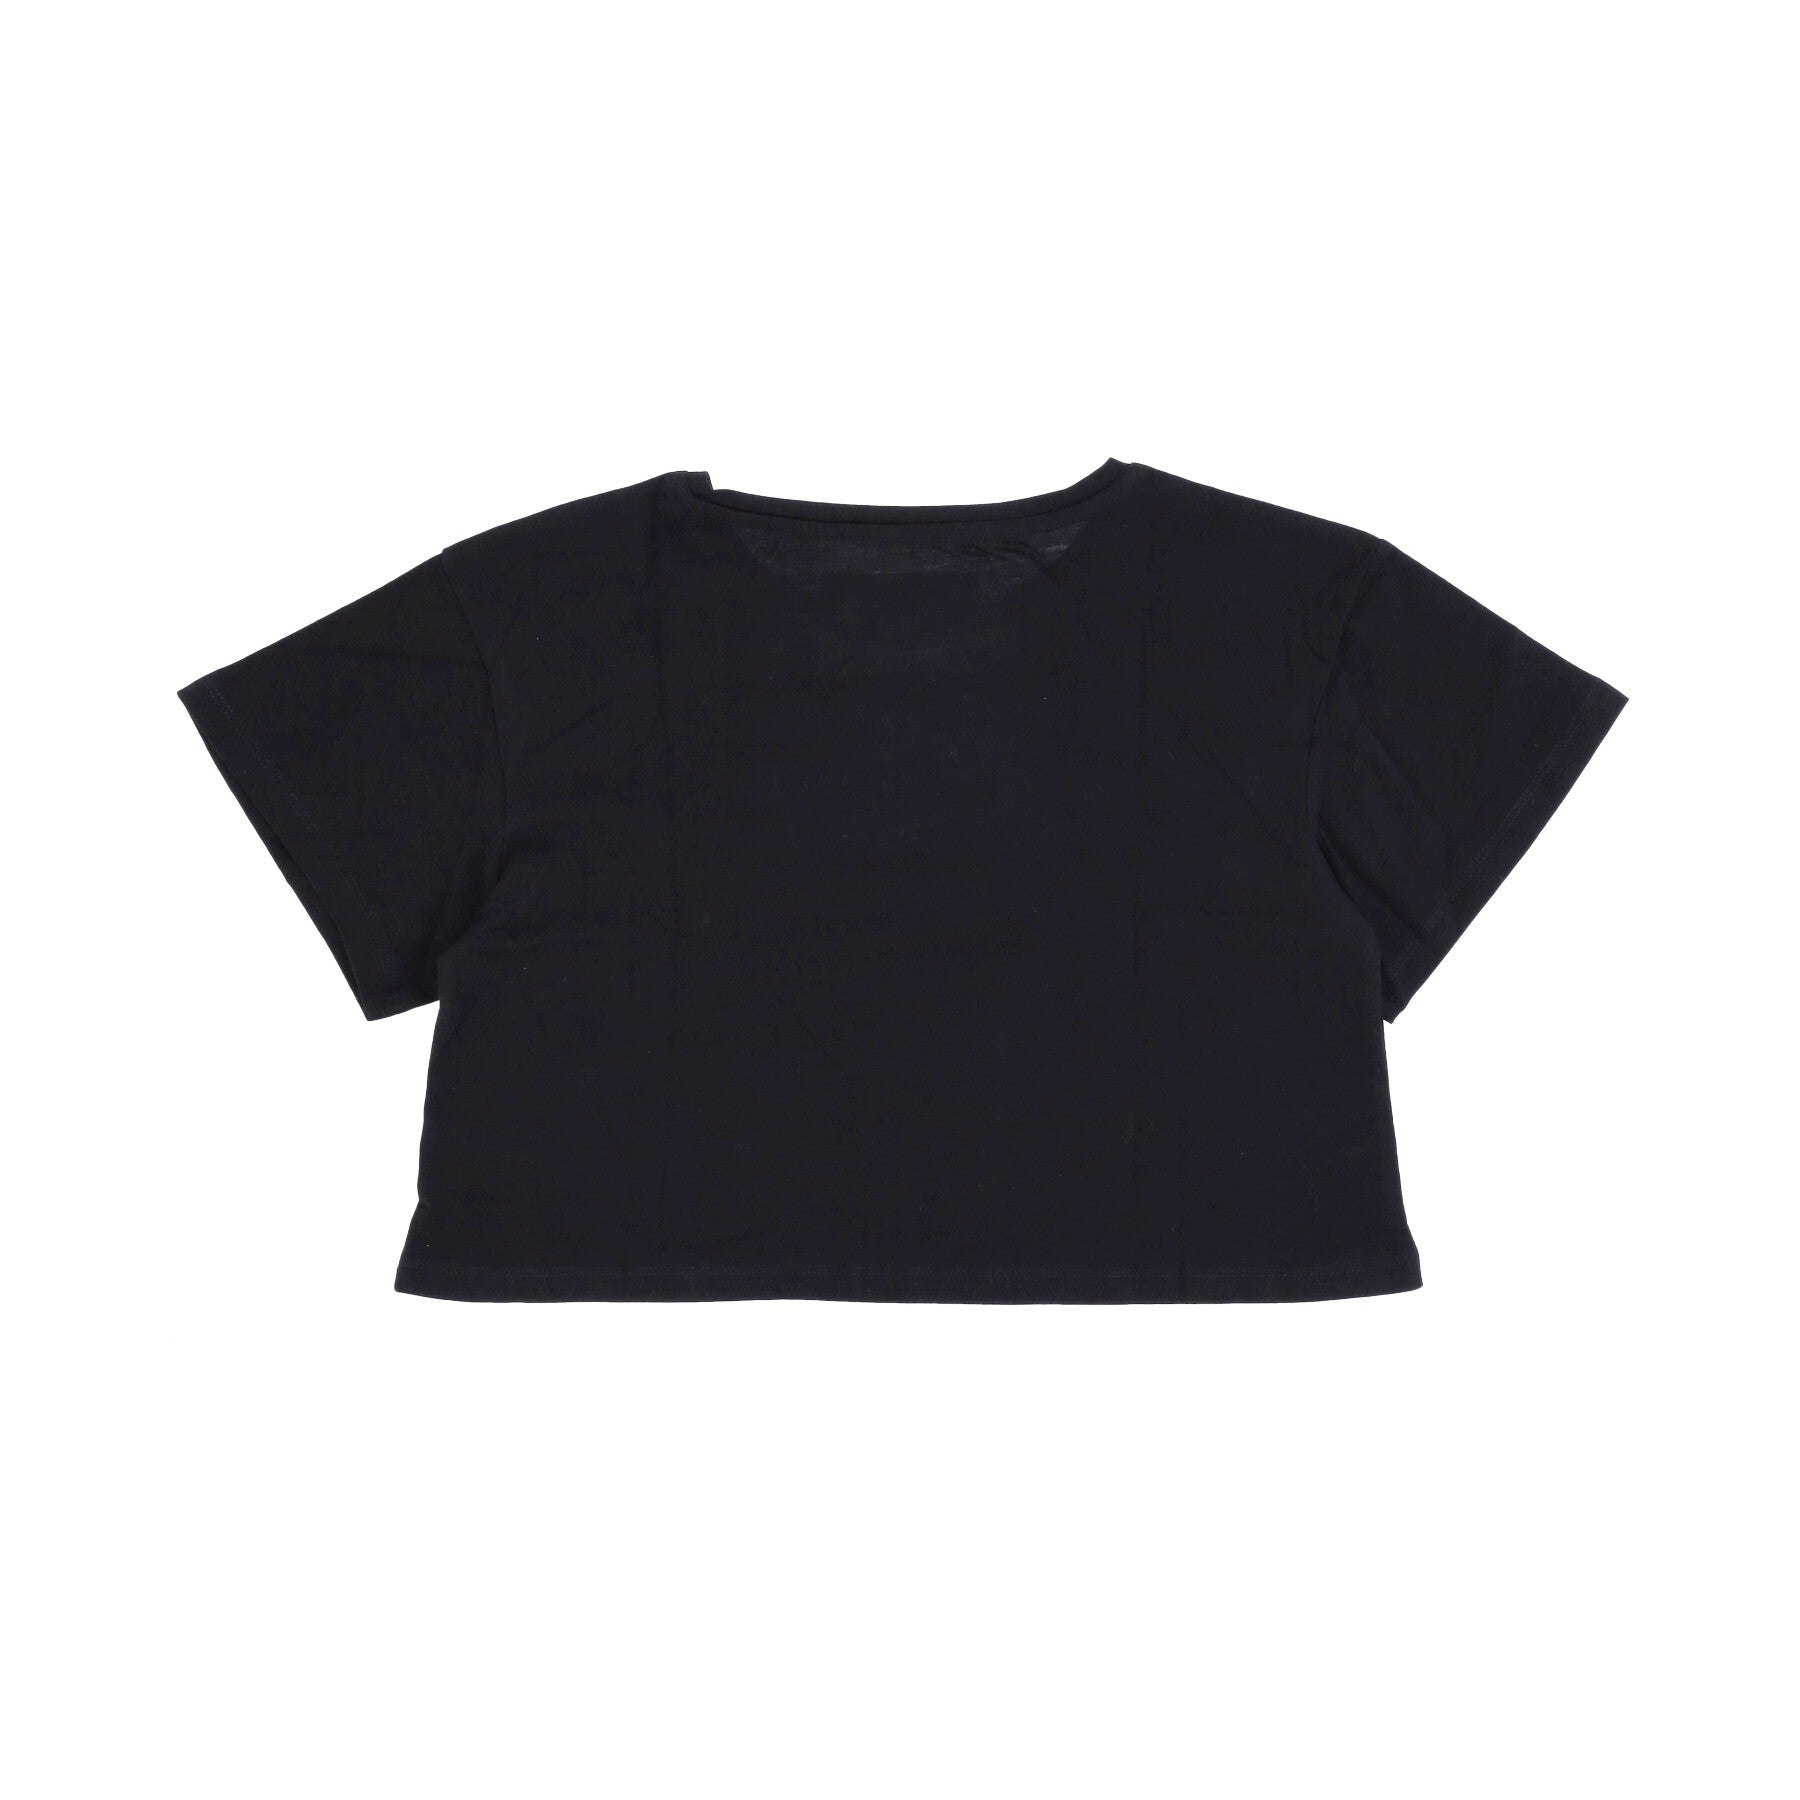 Donatella 01 Black Women's Cropped T-Shirt